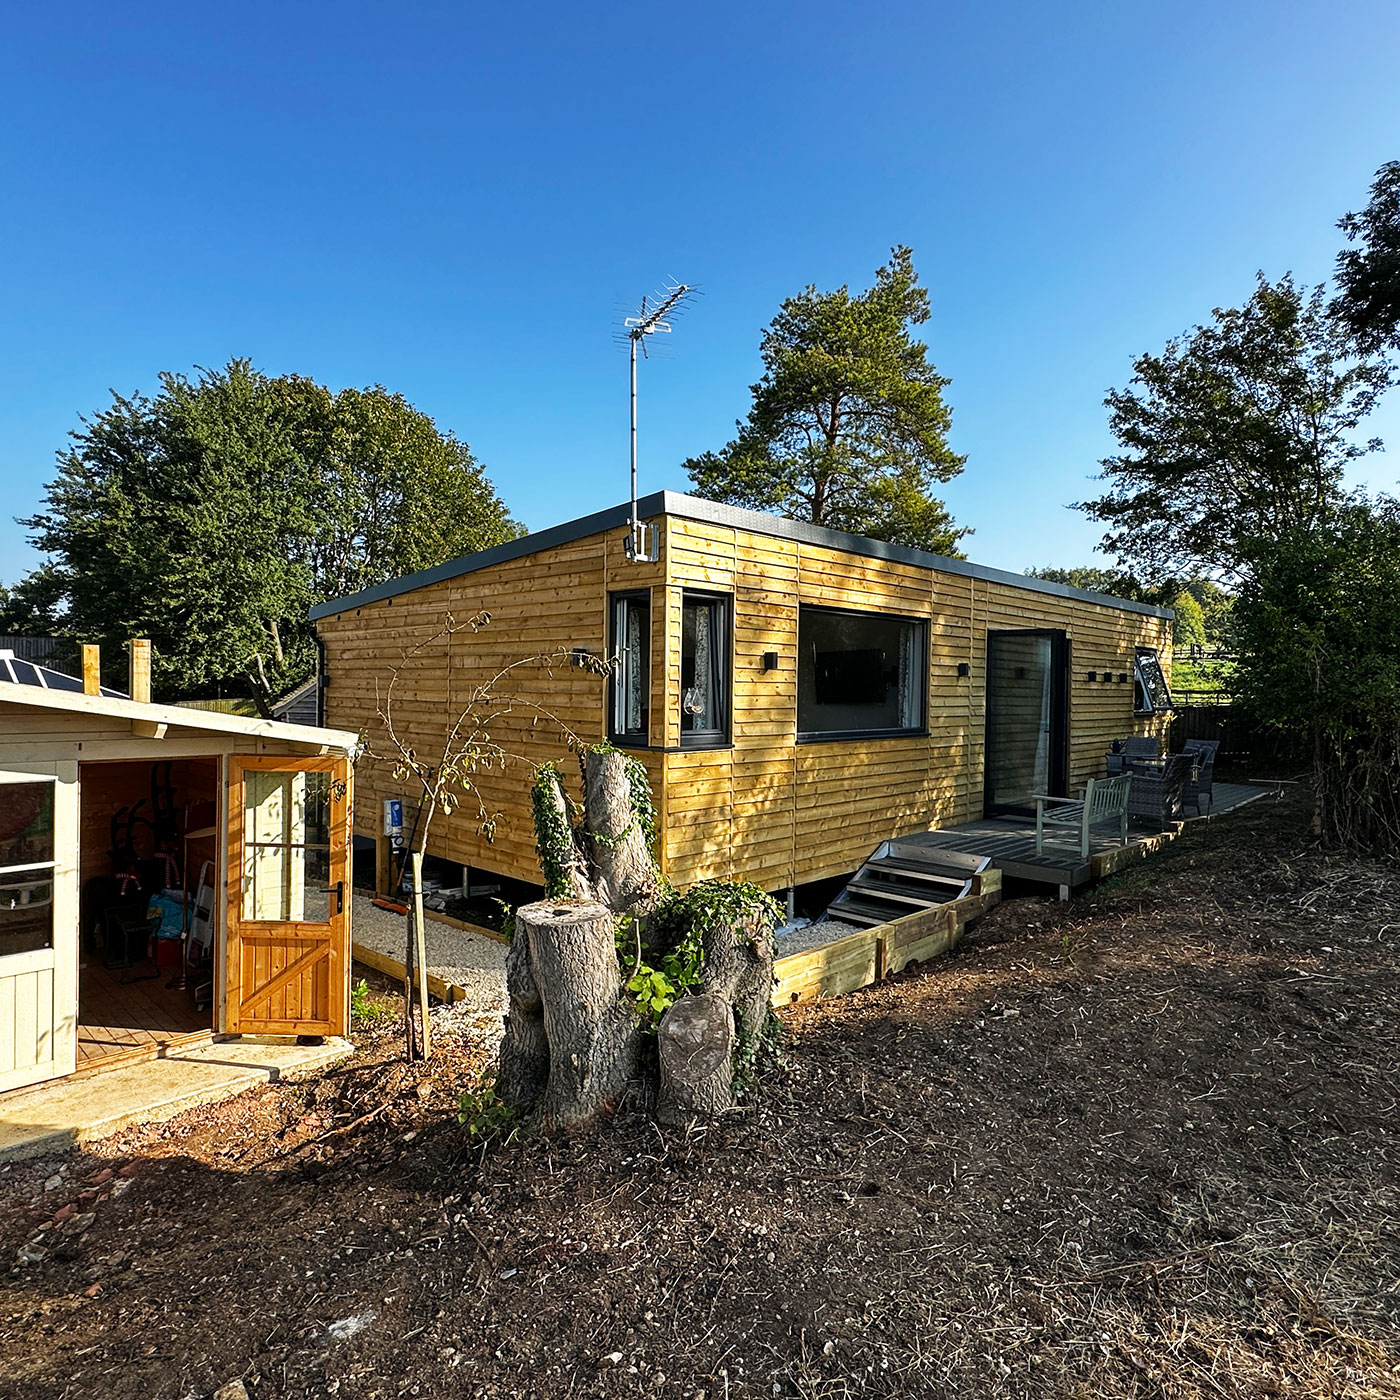 Designer bespoke mobile home with external wood cladding